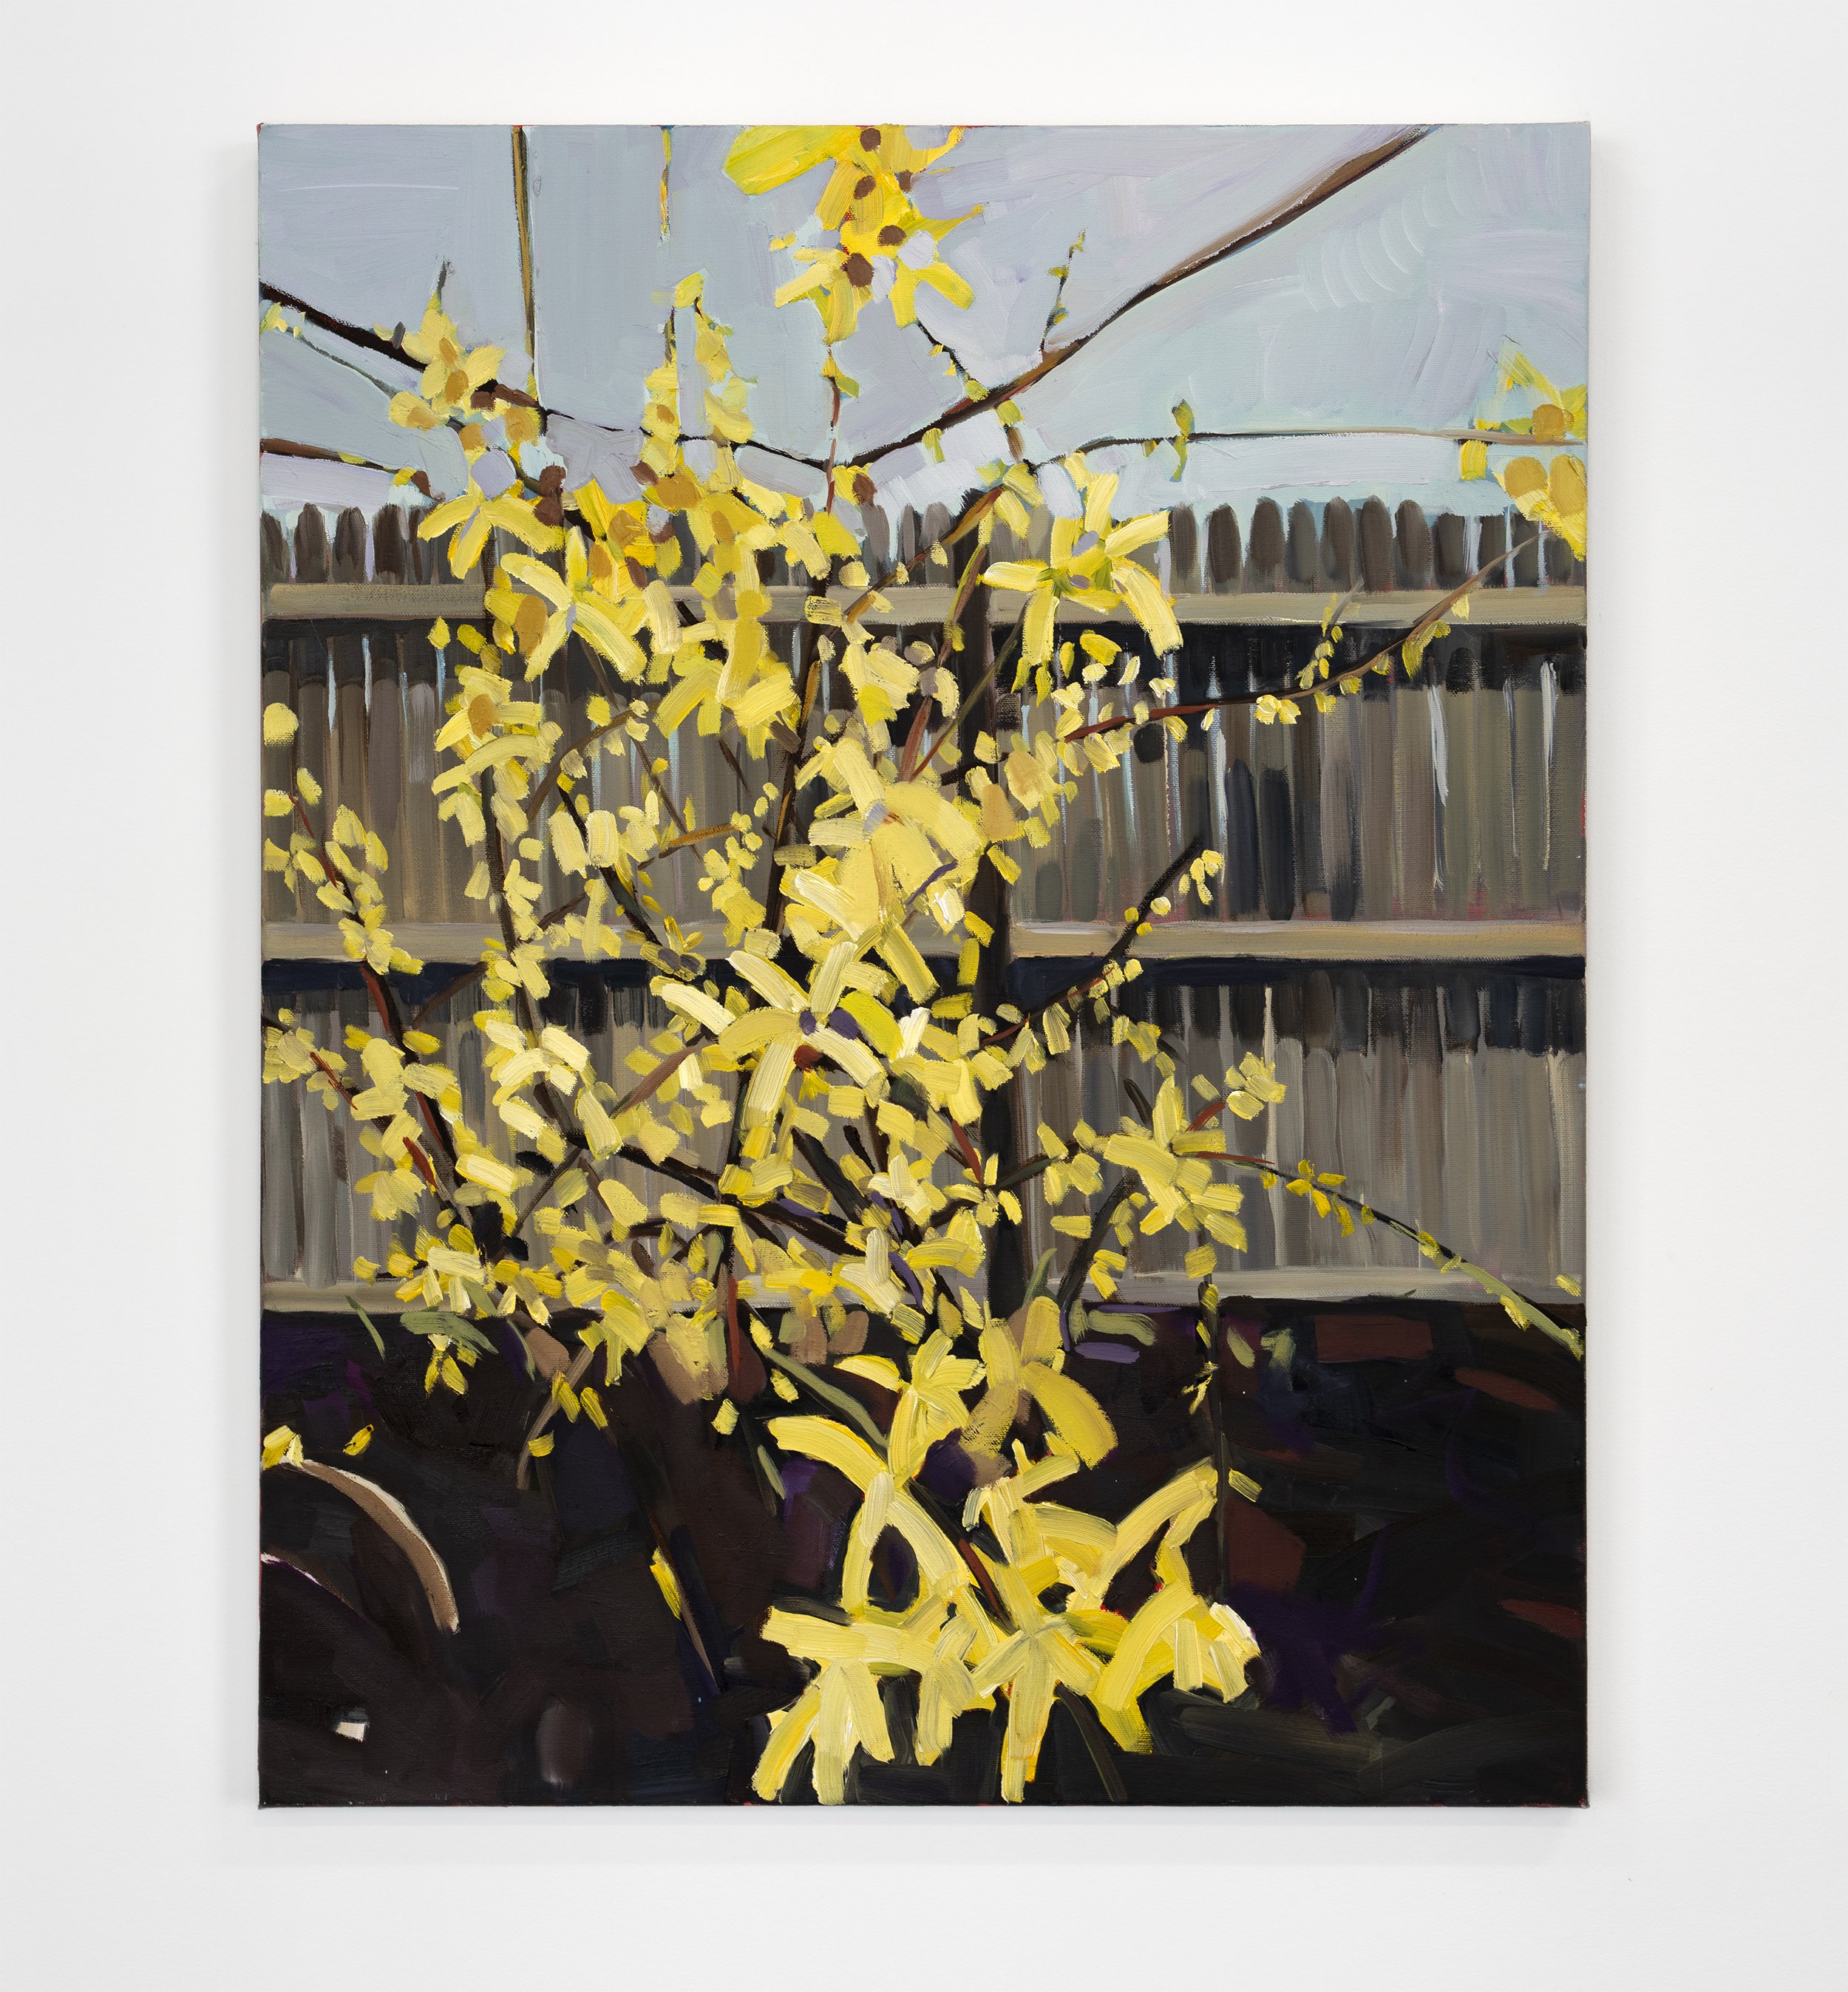   Forsythia Outside the Studio  (2022)  Oil on canvas, 28” x 22”  $2,800 